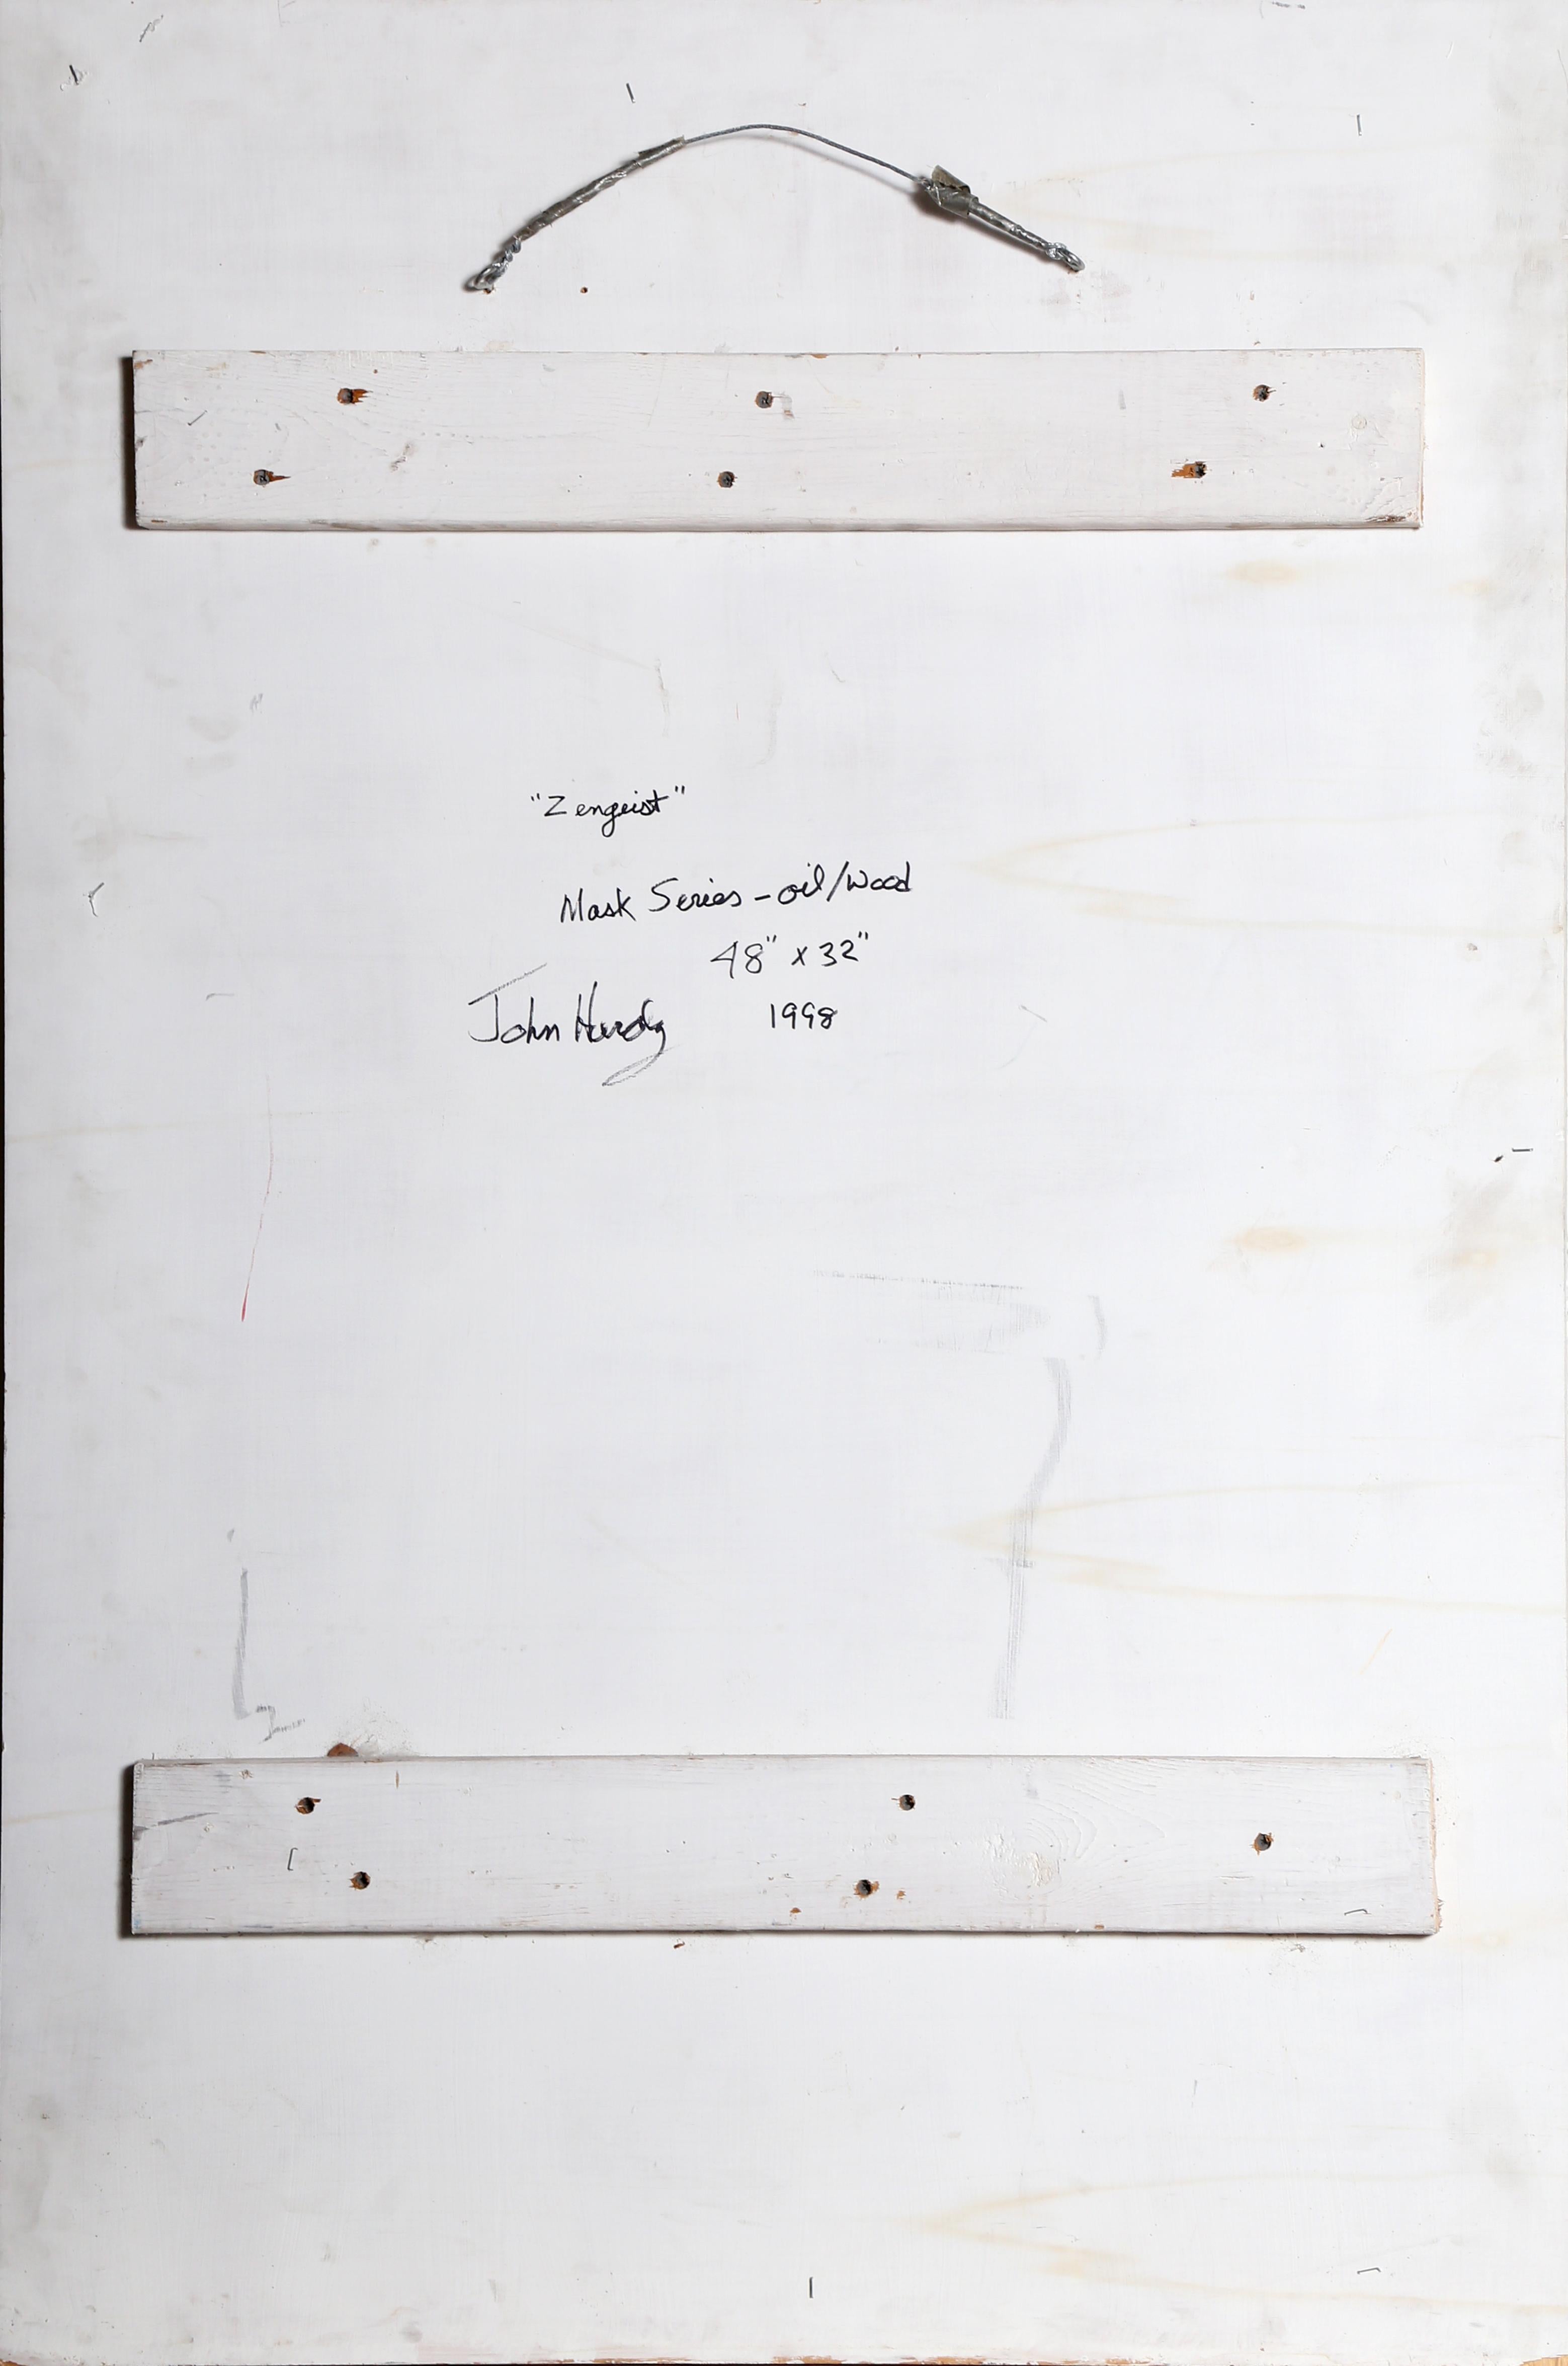 Zengeist (Maske)
John Hardy, Amerikaner (1923-2014)
Datum: 1998
Öl auf Holz, signiert
Größe: 48 x 32 Zoll (121,92 x 81,28 cm)
Referenz: Bool 405